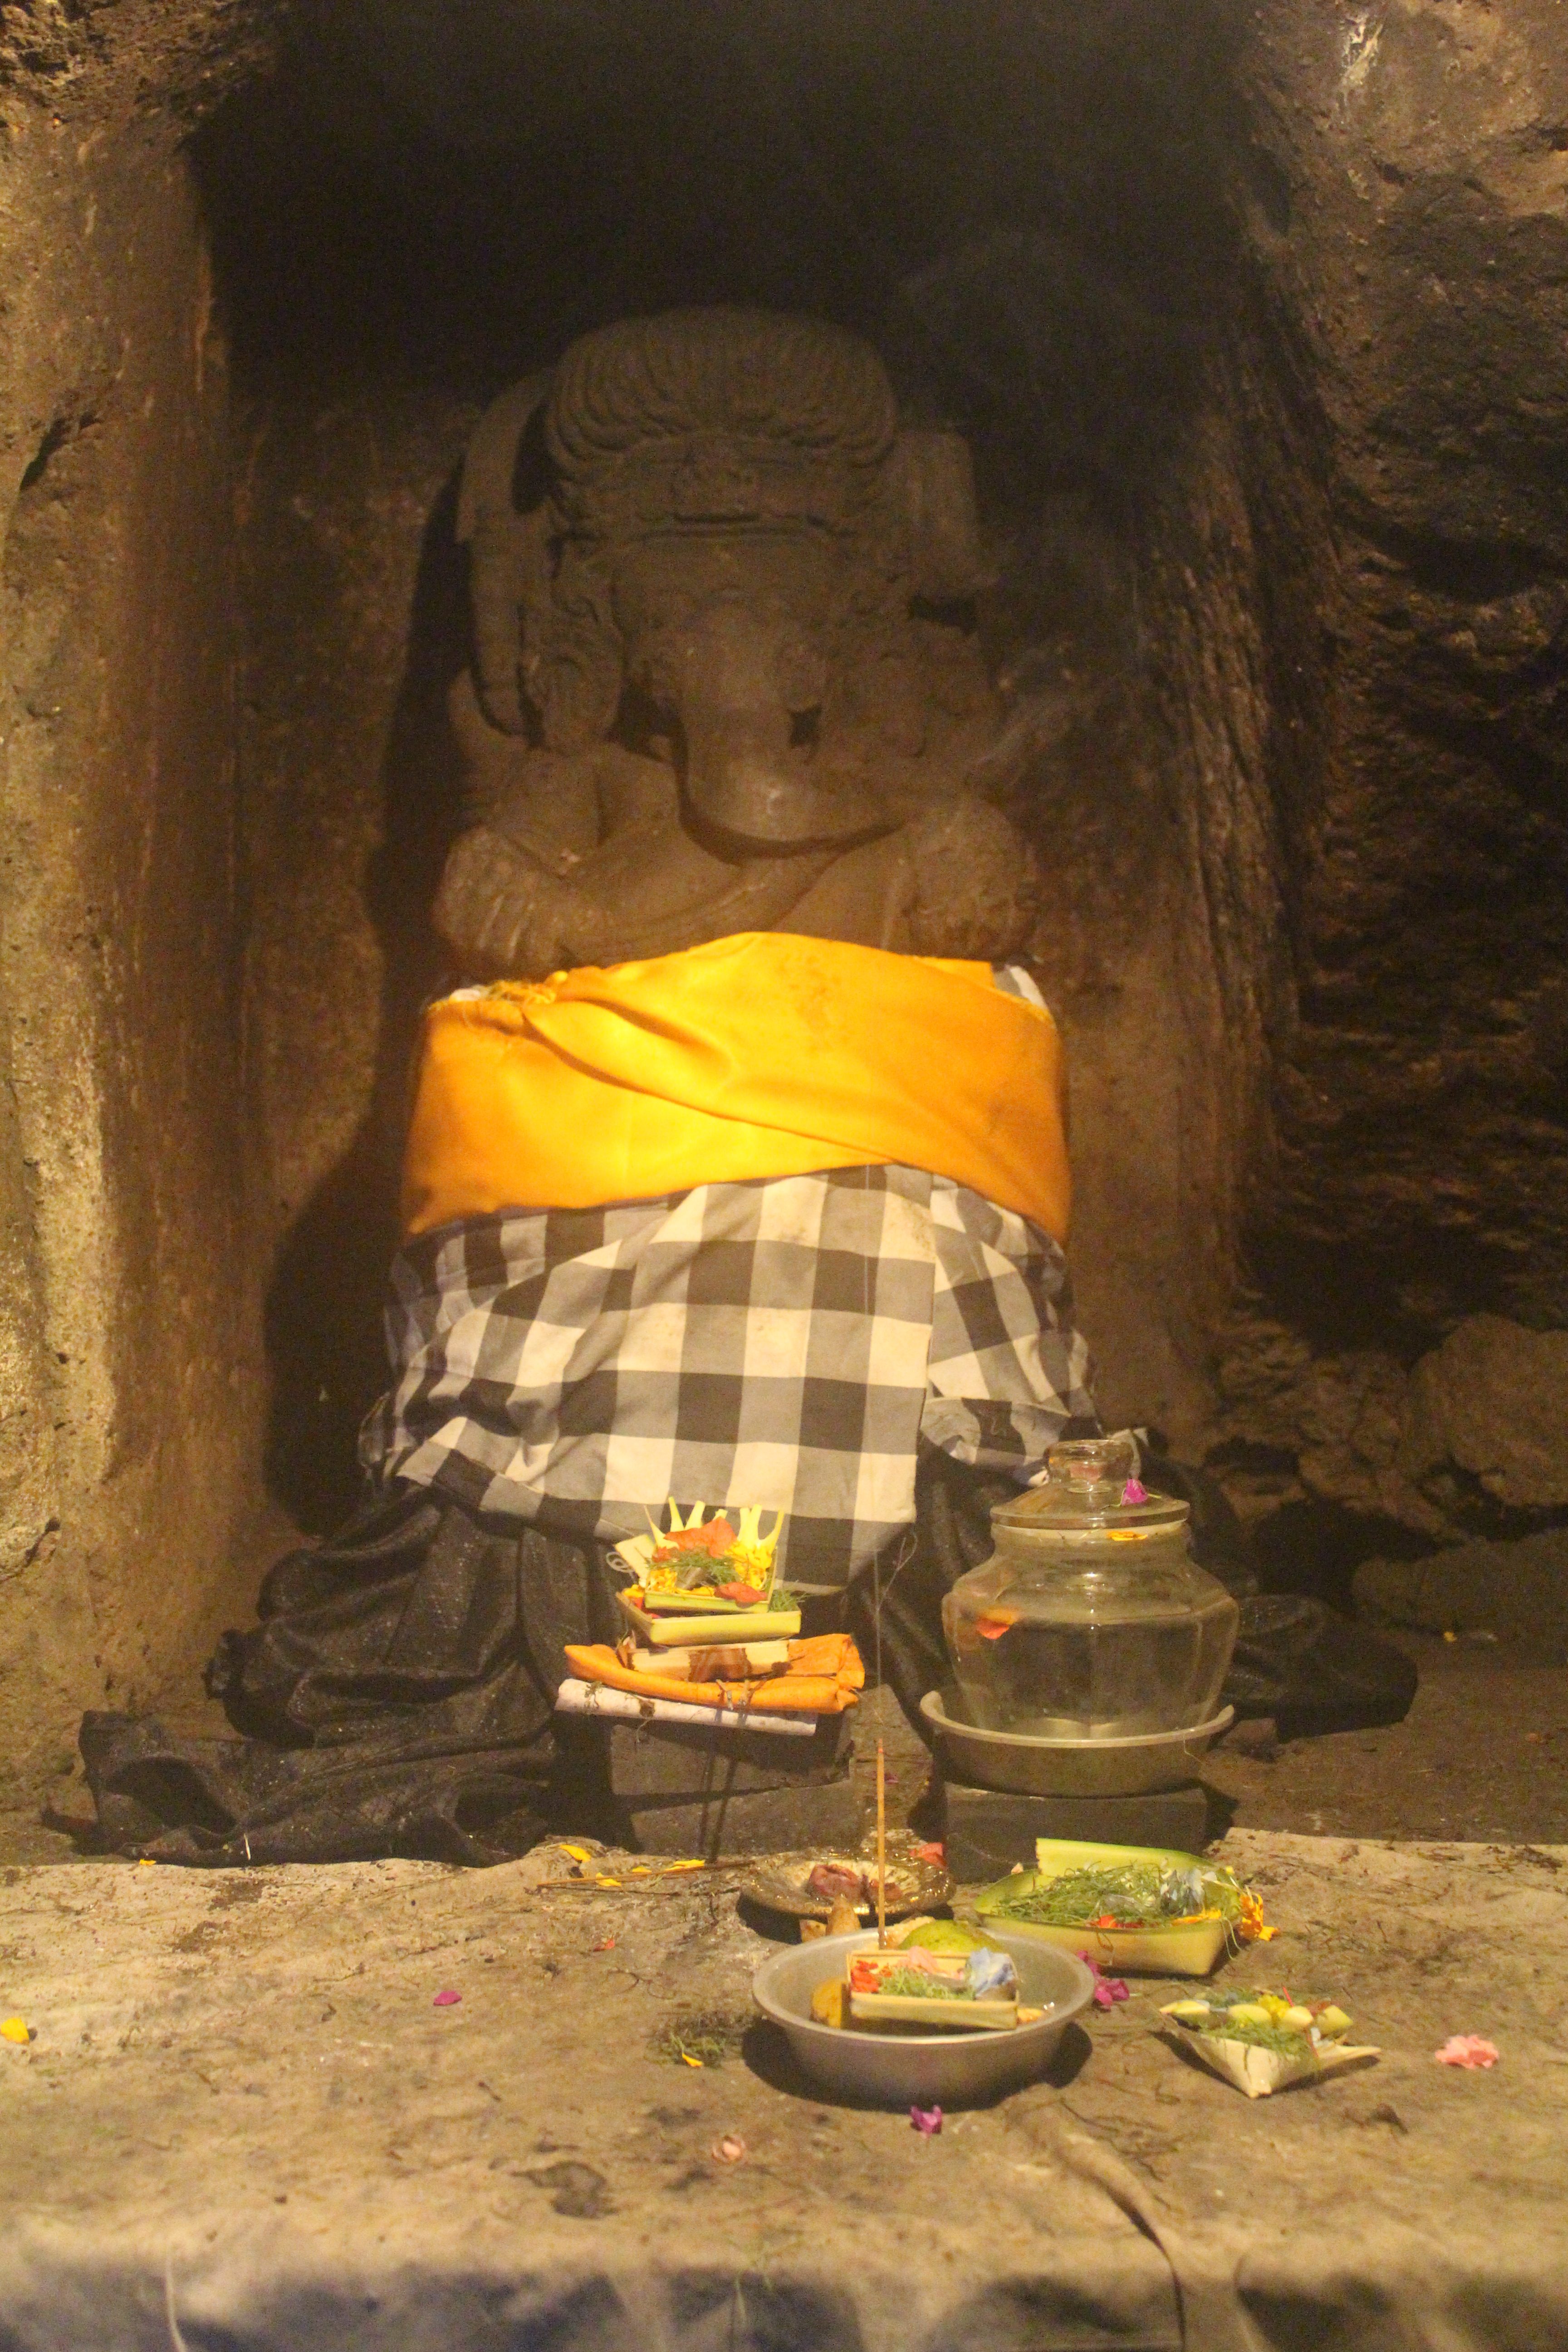 Ganesha sculpture enshrined wearing checker cloth